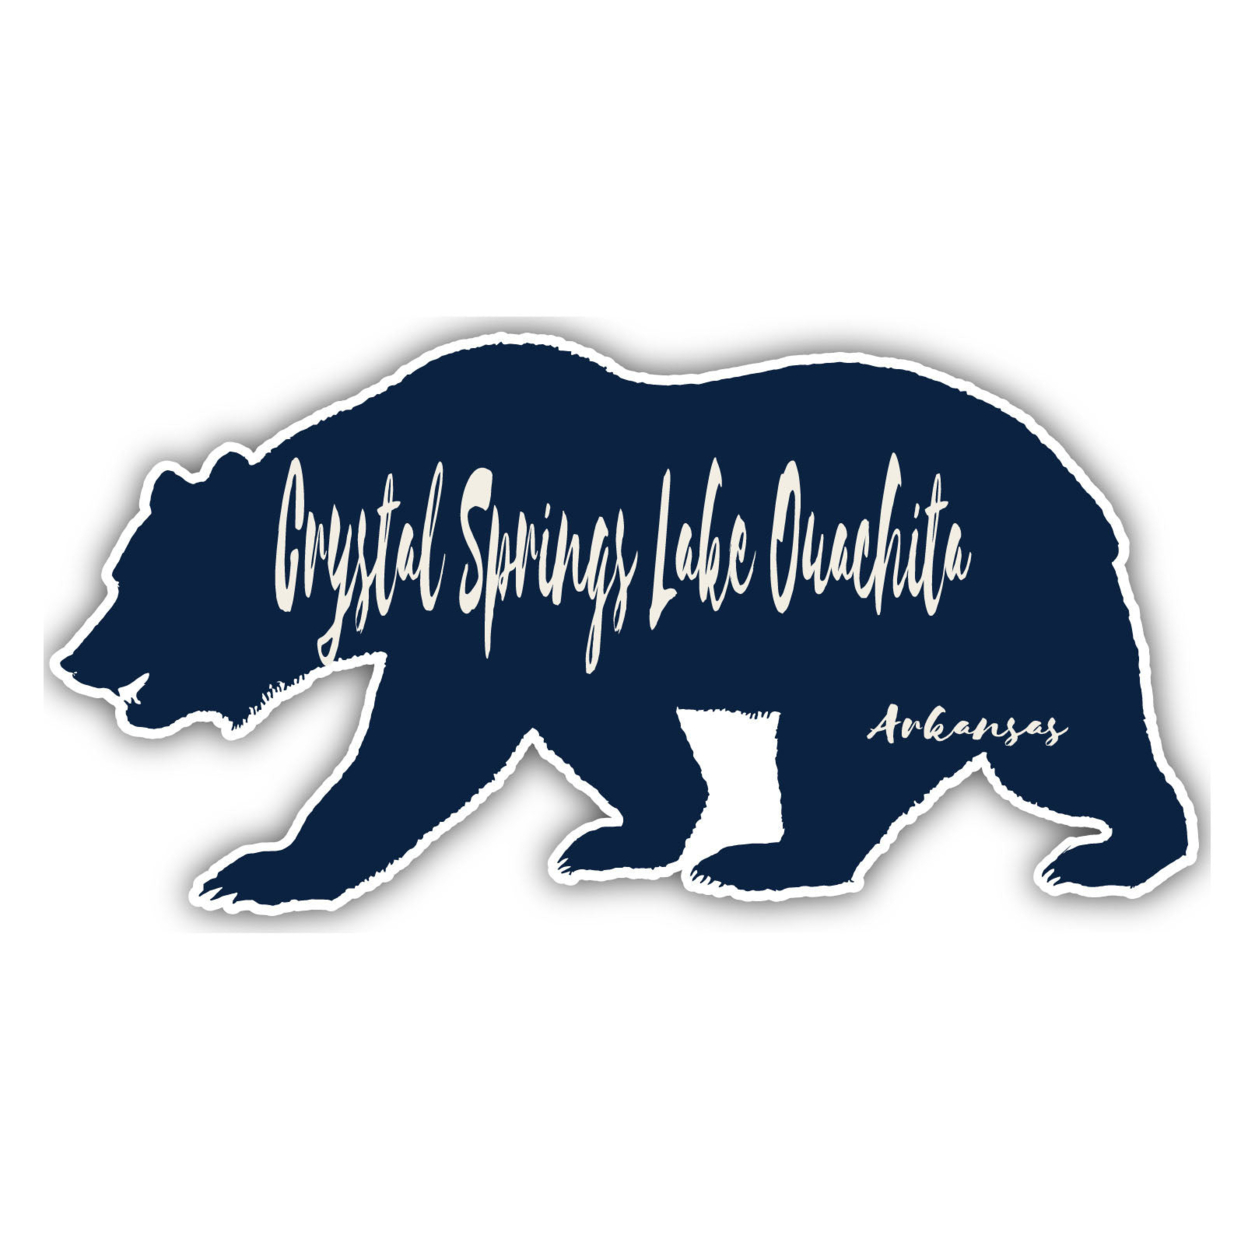 Crystal Springs Lake Ouachita Arkansas Souvenir Decorative Stickers (Choose Theme And Size) - Single Unit, 4-Inch, Tent